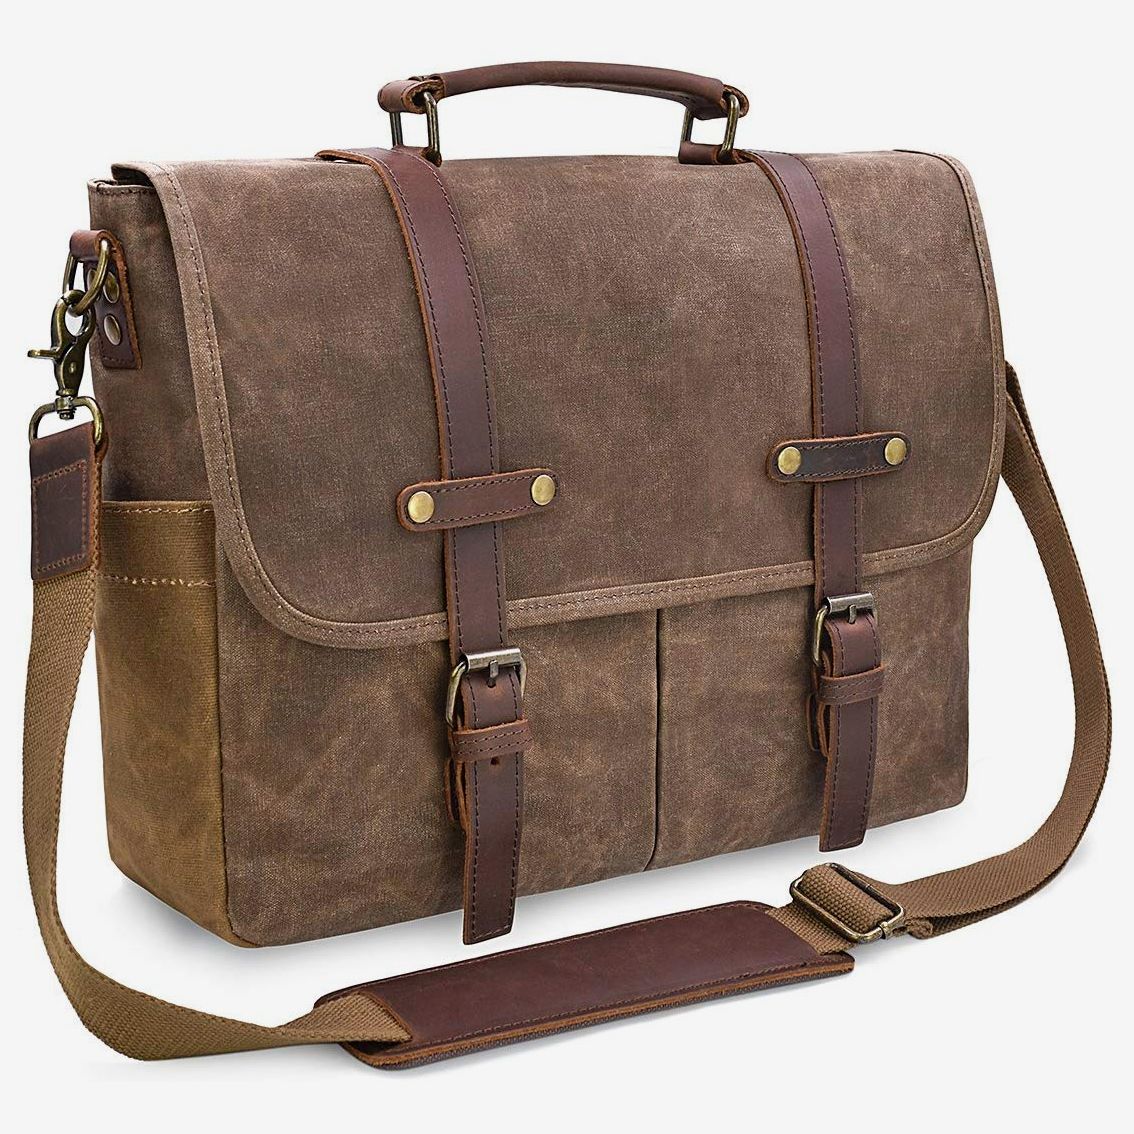 Genuine Leather Black Fashion Design Men Handbag Briefcase Business 15 Computer Notebook Laptop Case Attache Messenger Bag Portfolio Satchel Bags & Purses Luggage & Travel Briefcases & Attaches 